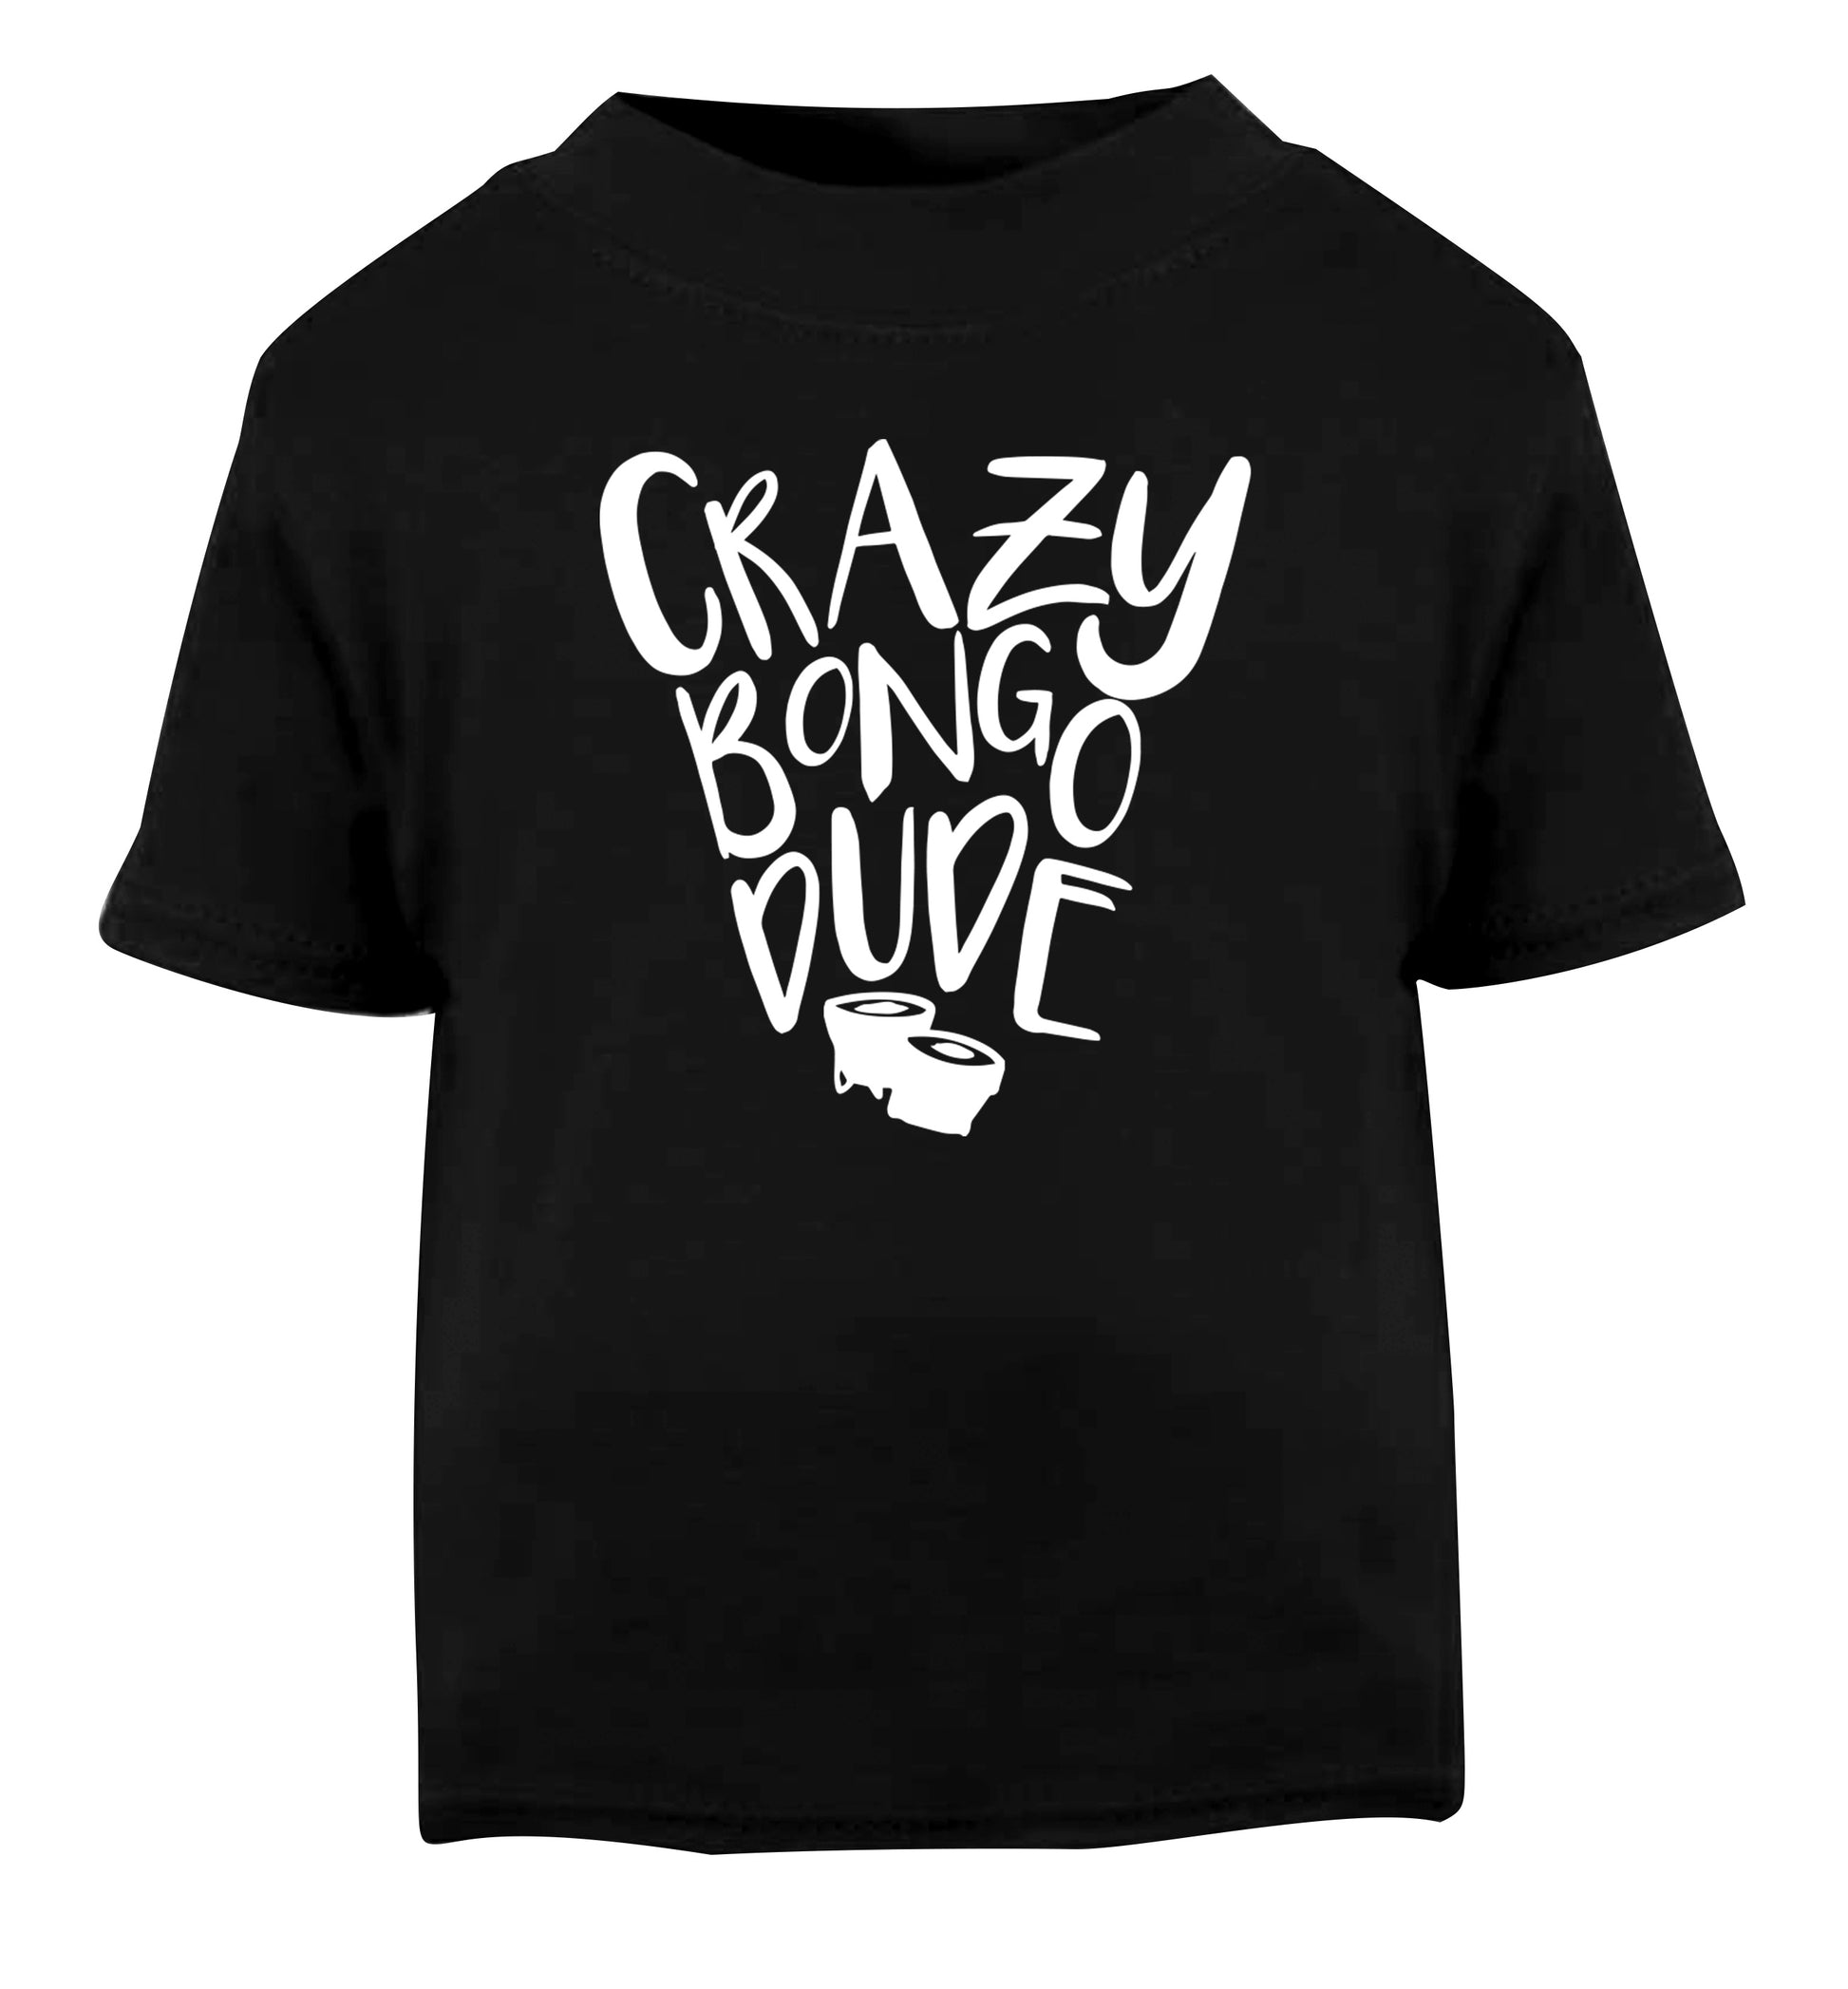 Crazy bongo dude Black Baby Toddler Tshirt 2 years